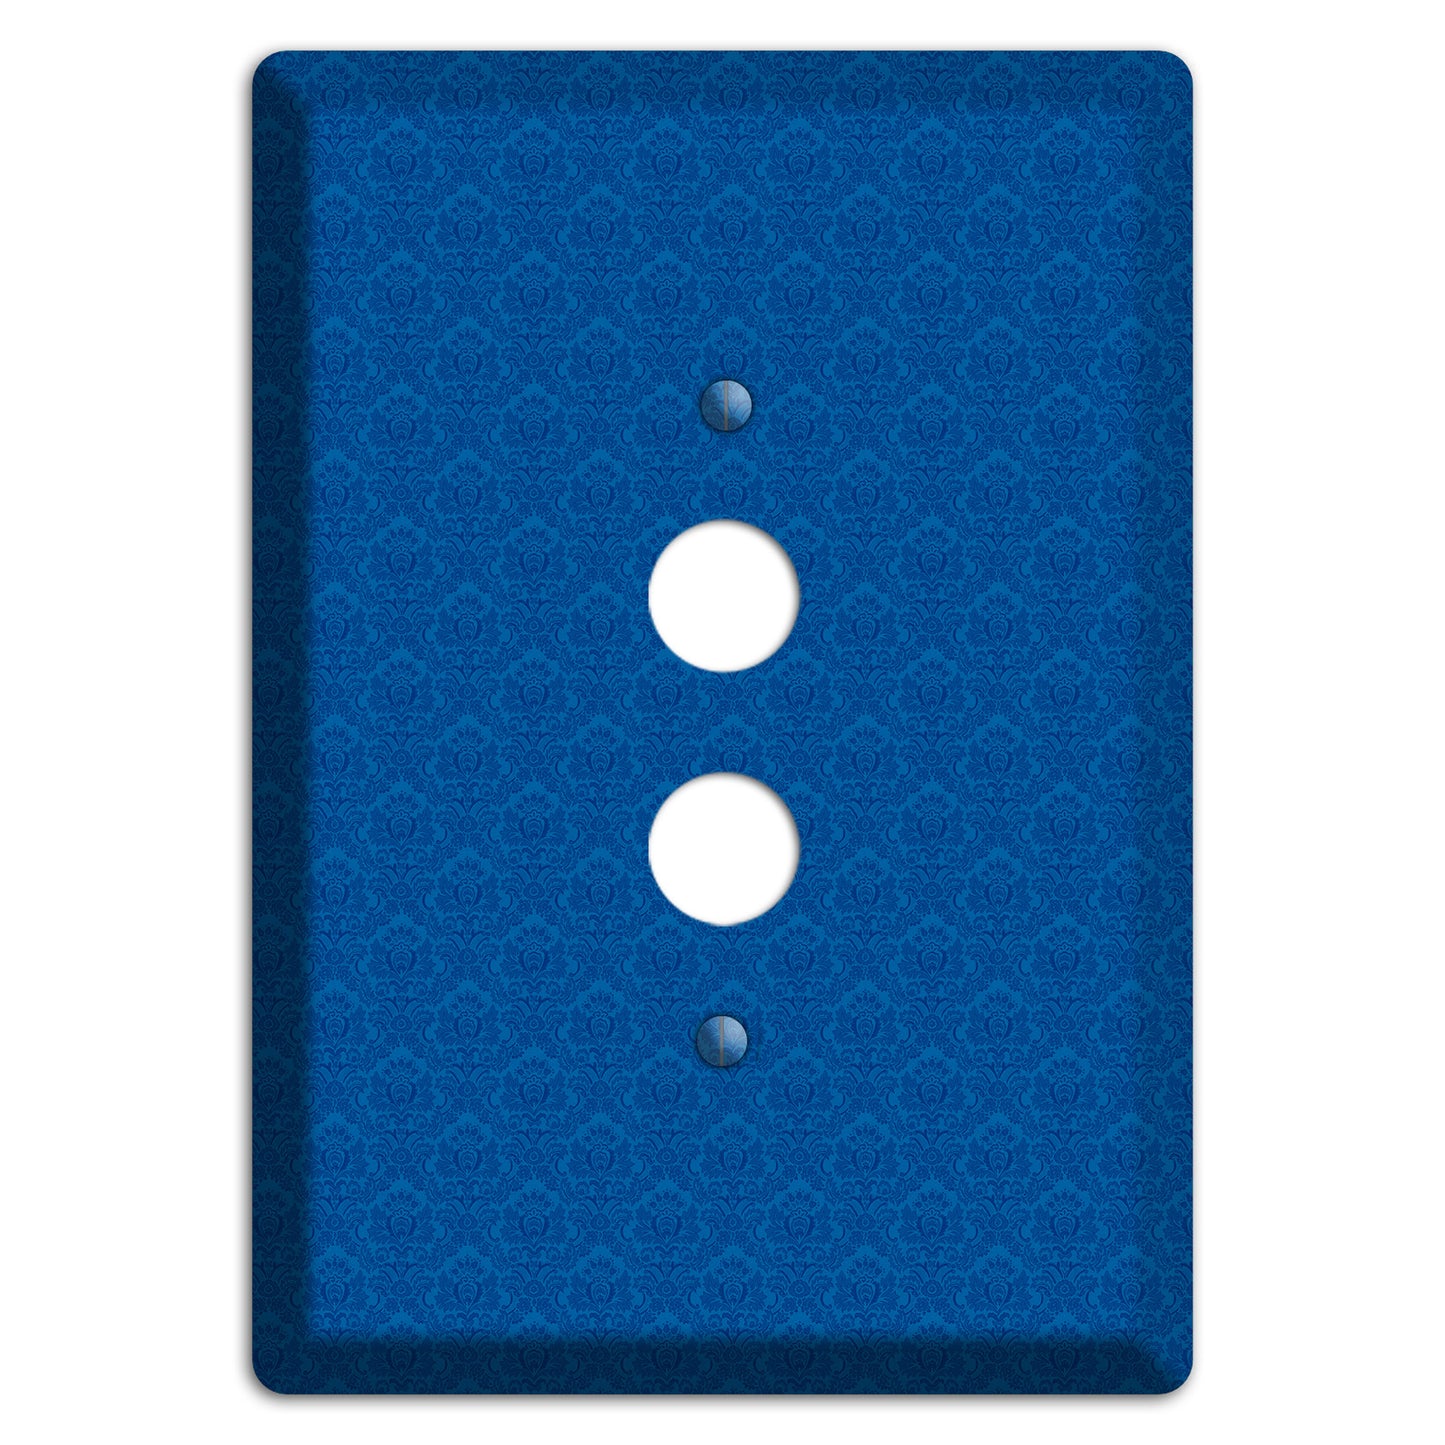 Blue Cartouche 1 Pushbutton Wallplate